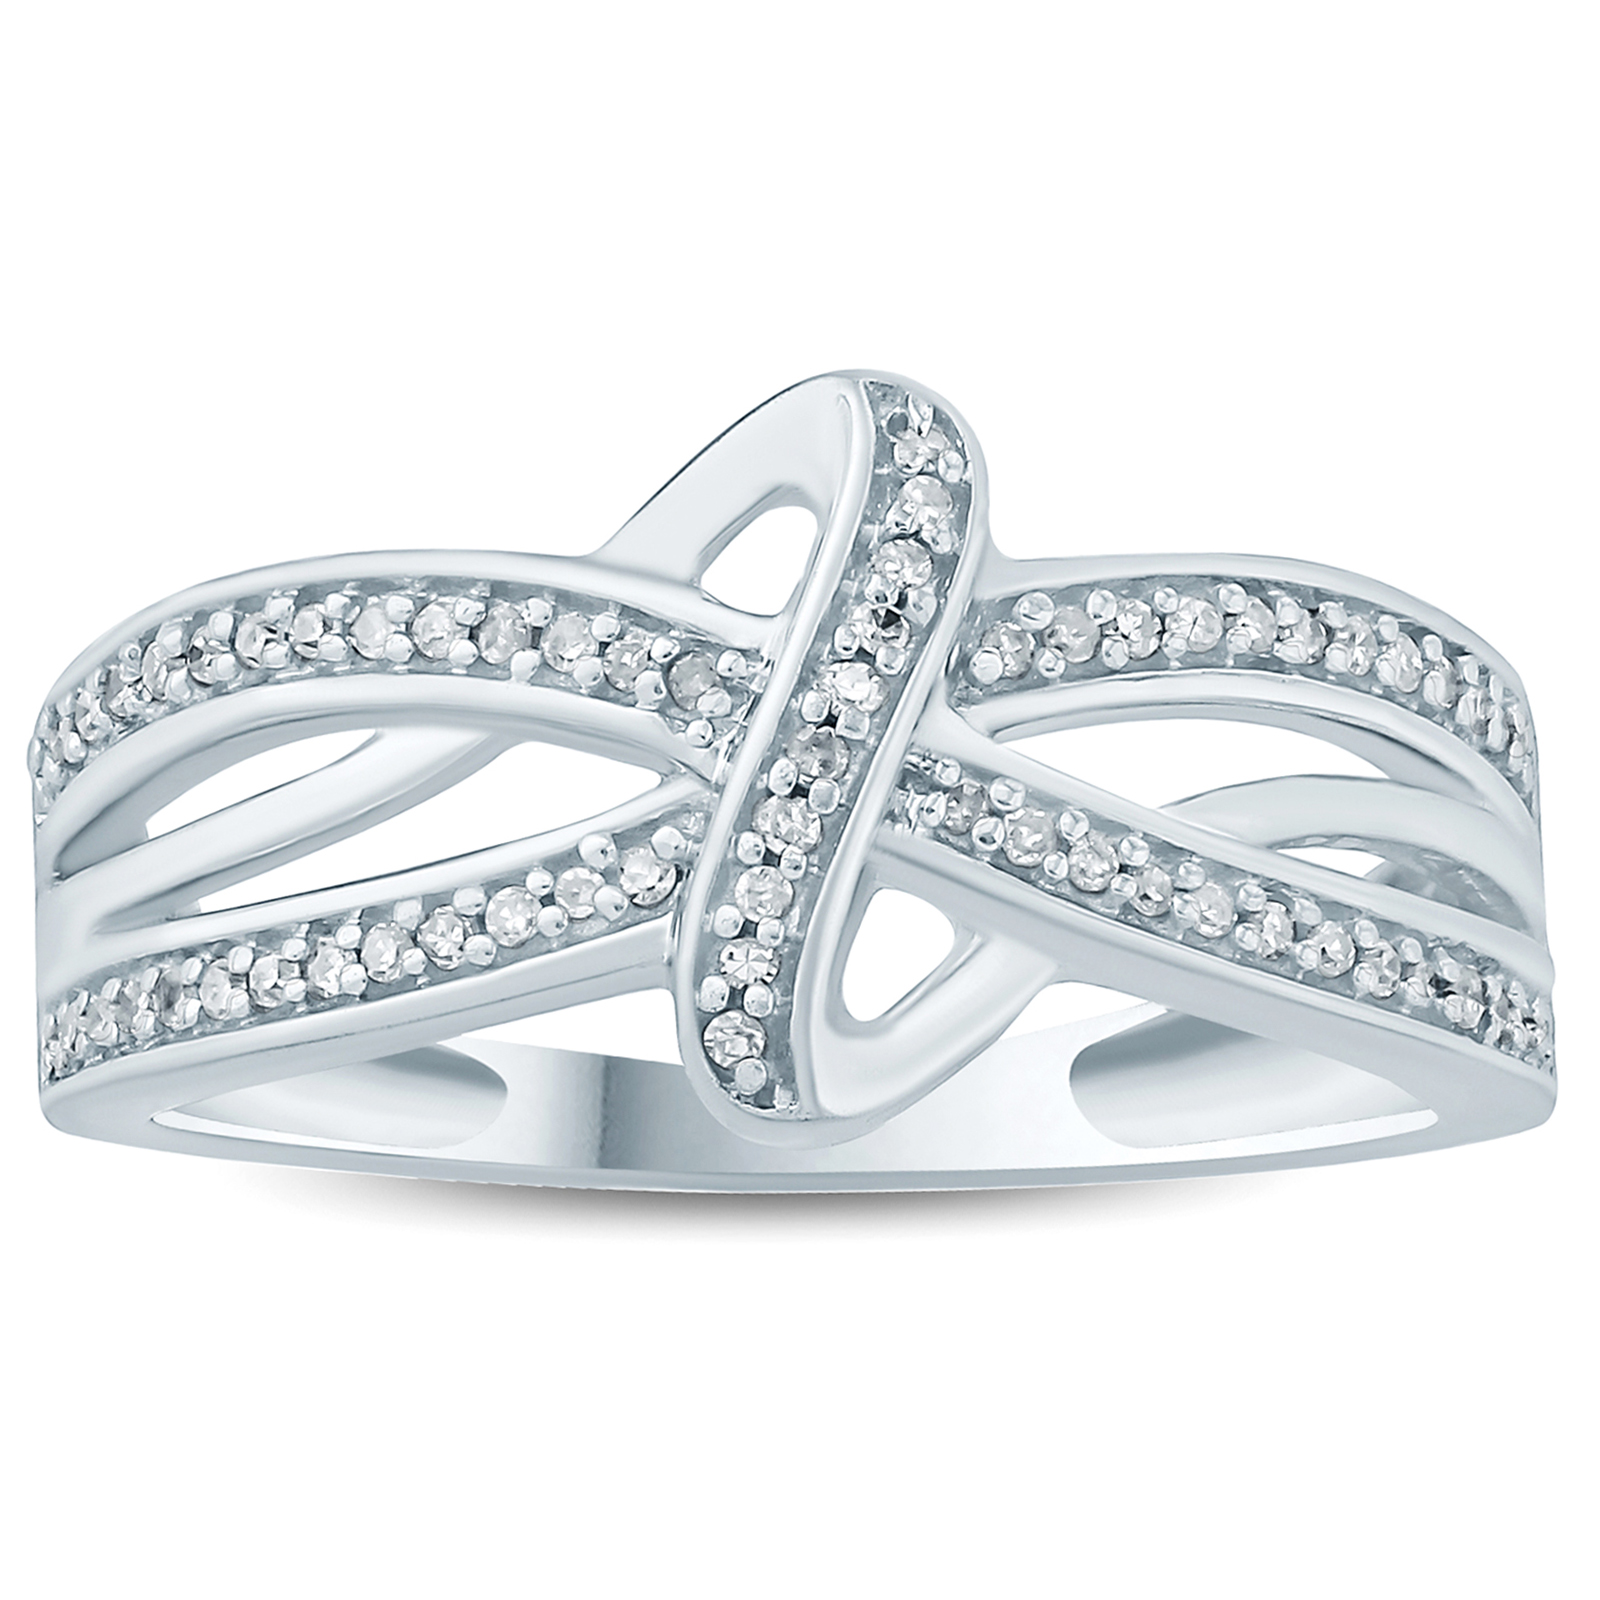 1/5 Carat TW Diamond Knot Ring in 10K White Gold